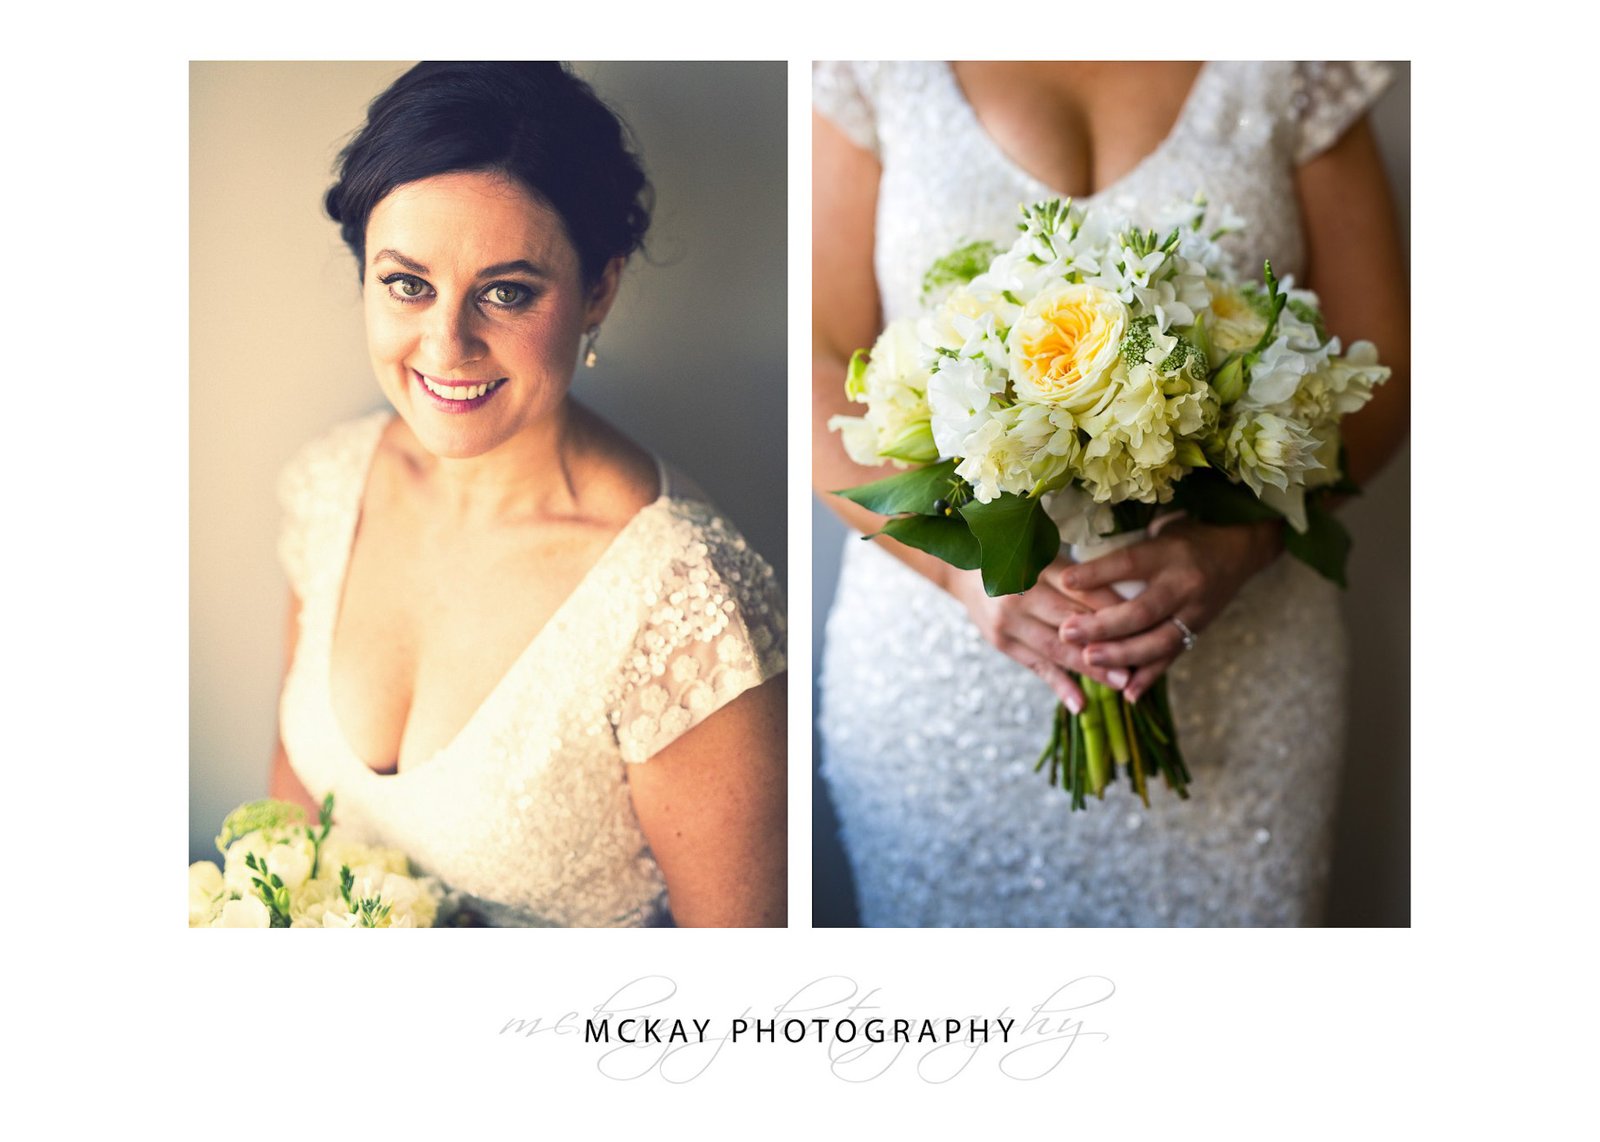 Bride detail photos dress and flowers bouquet